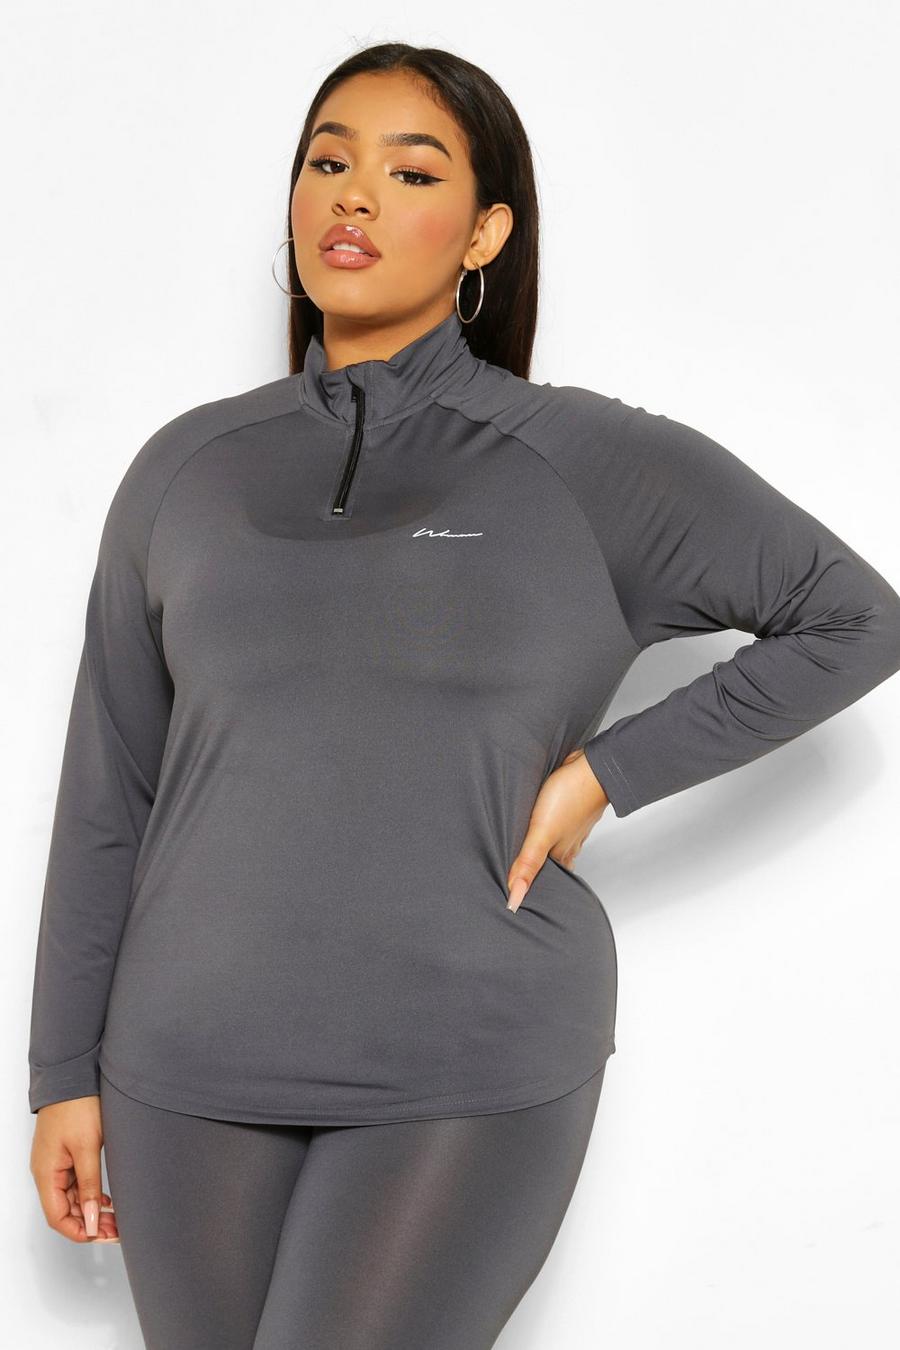 Charcoal grey Plus Activewear 'Woman' Raglan Funnel Neck Gym Top